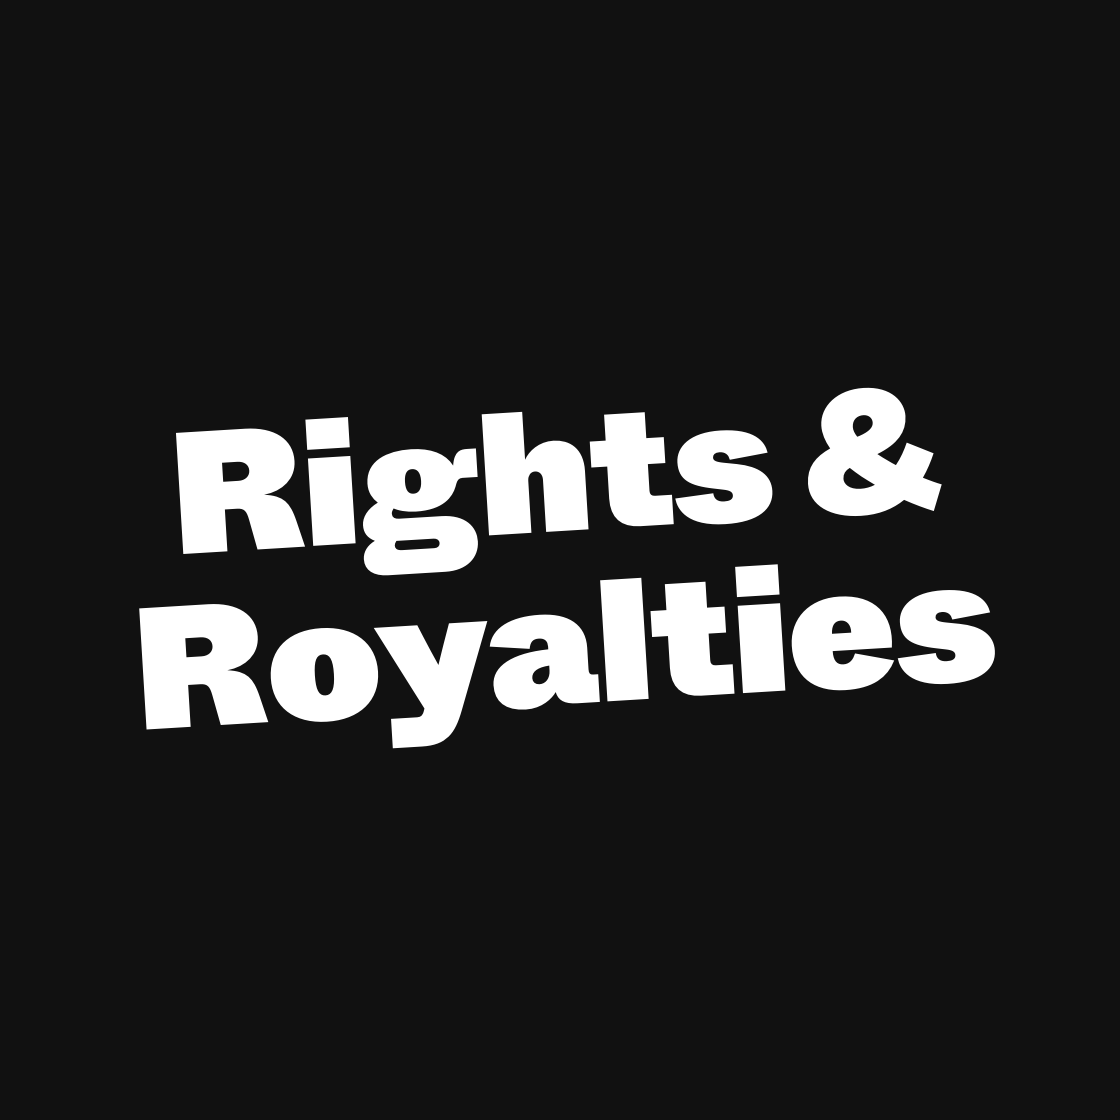 Rights & Royalties